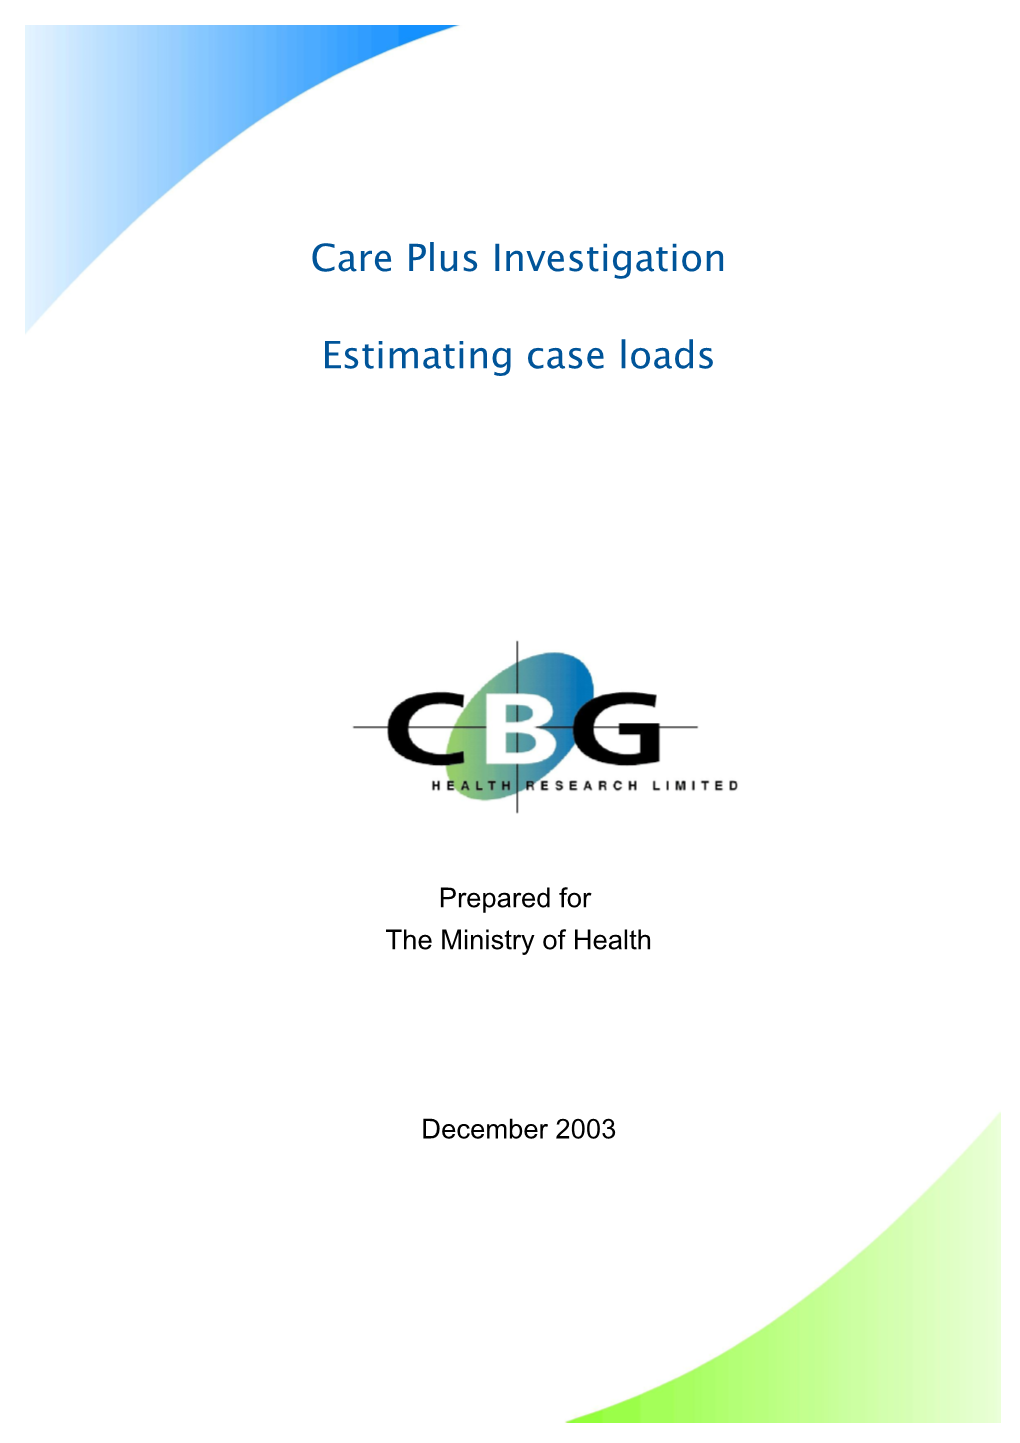 Care Plus Investigation Estimating Case Loads